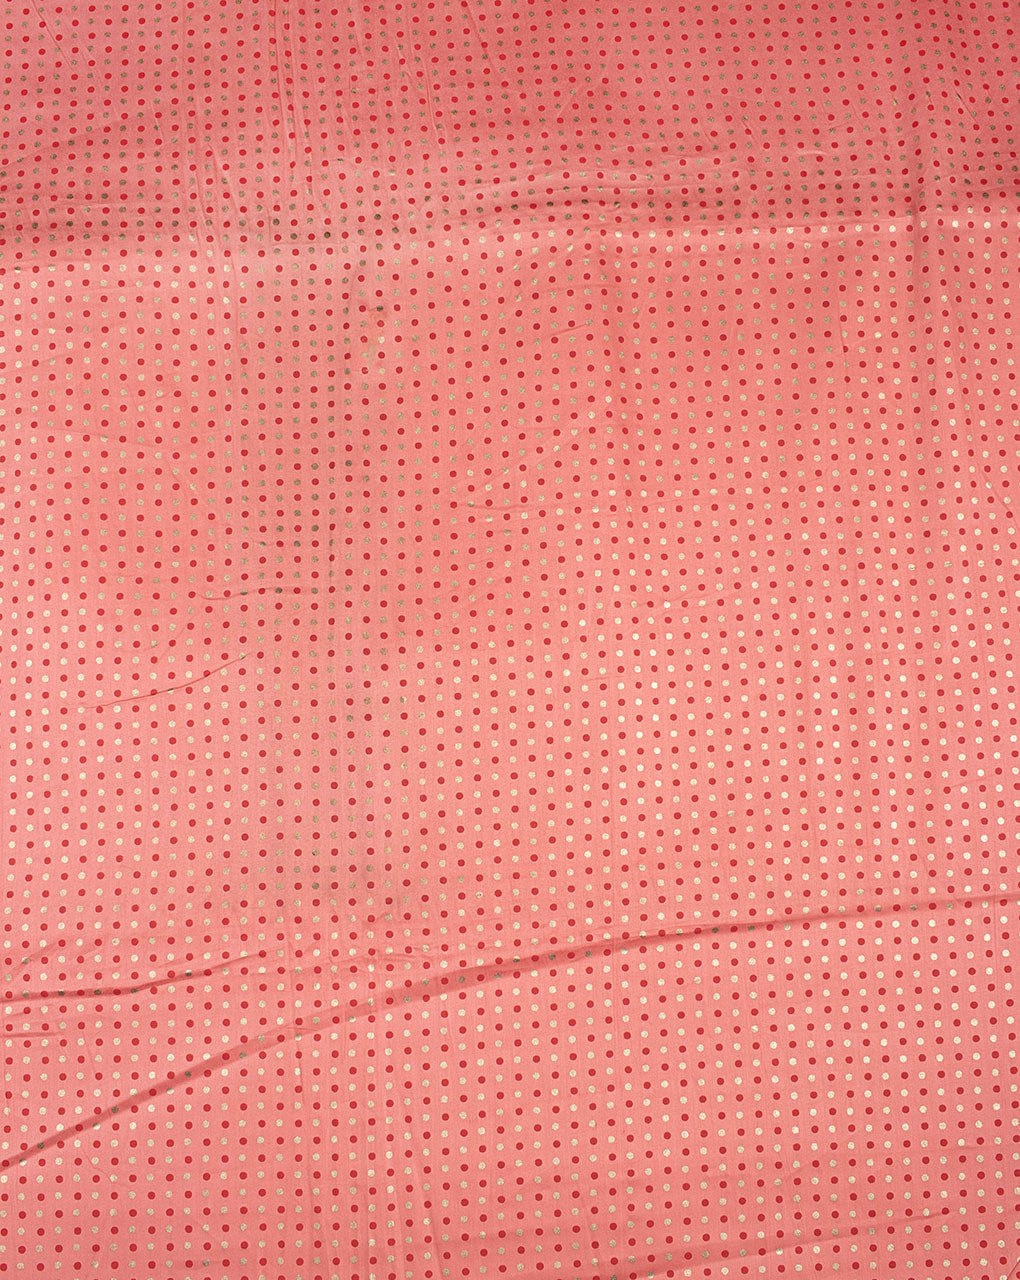 Foil Screen Print Glazed Cotton Fabric - Fabriclore.com